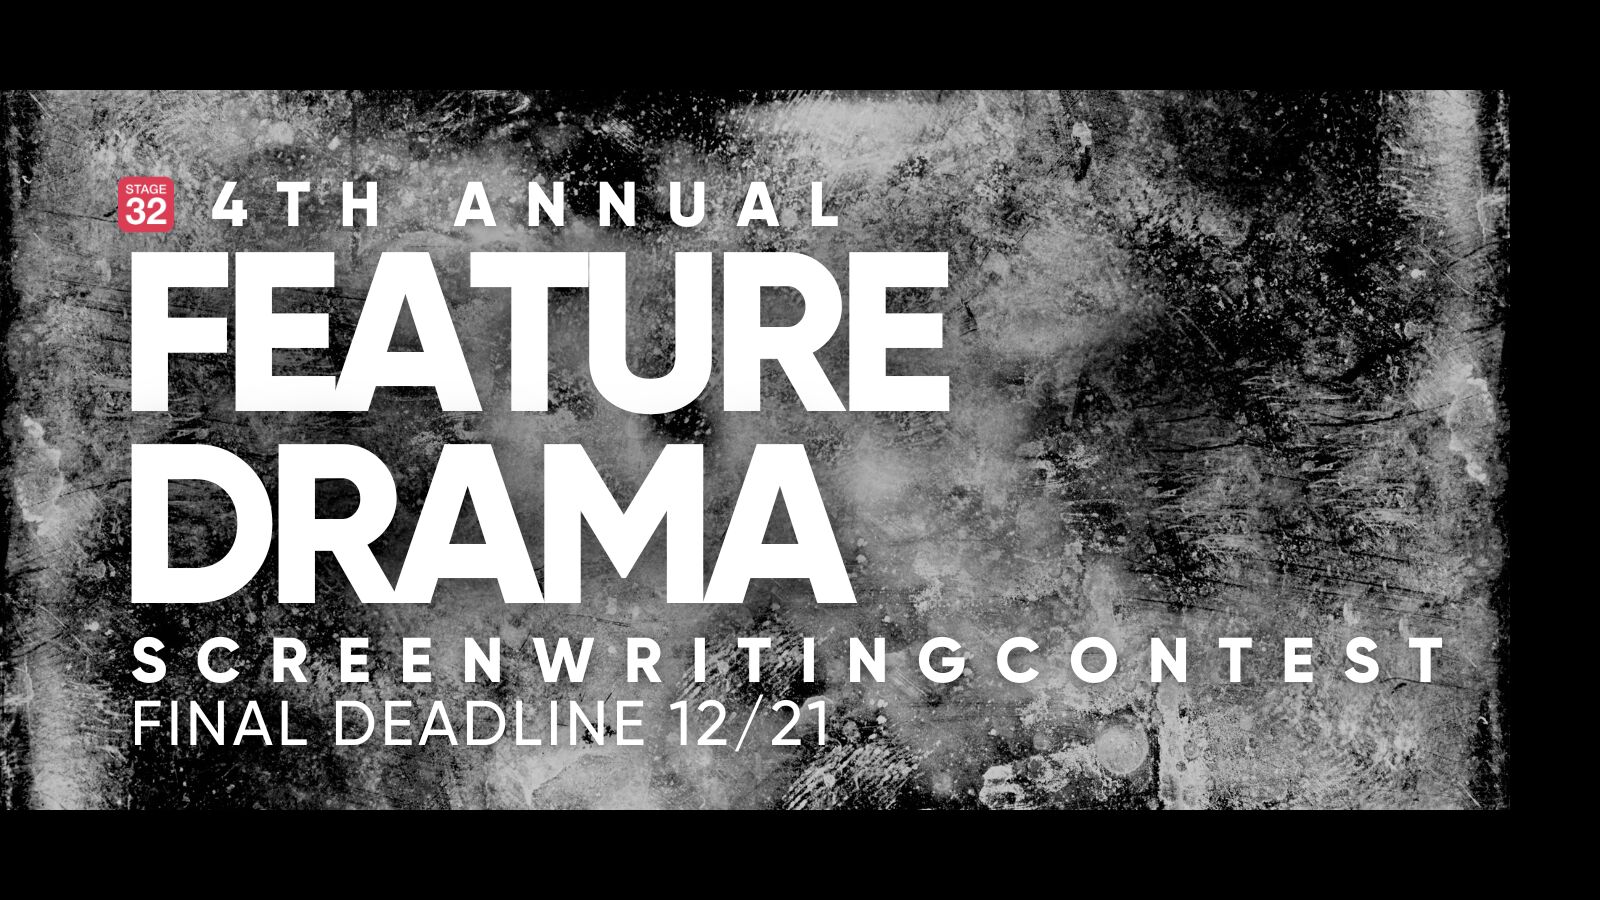 4th Annual Feature Drama Screenwriting Contest